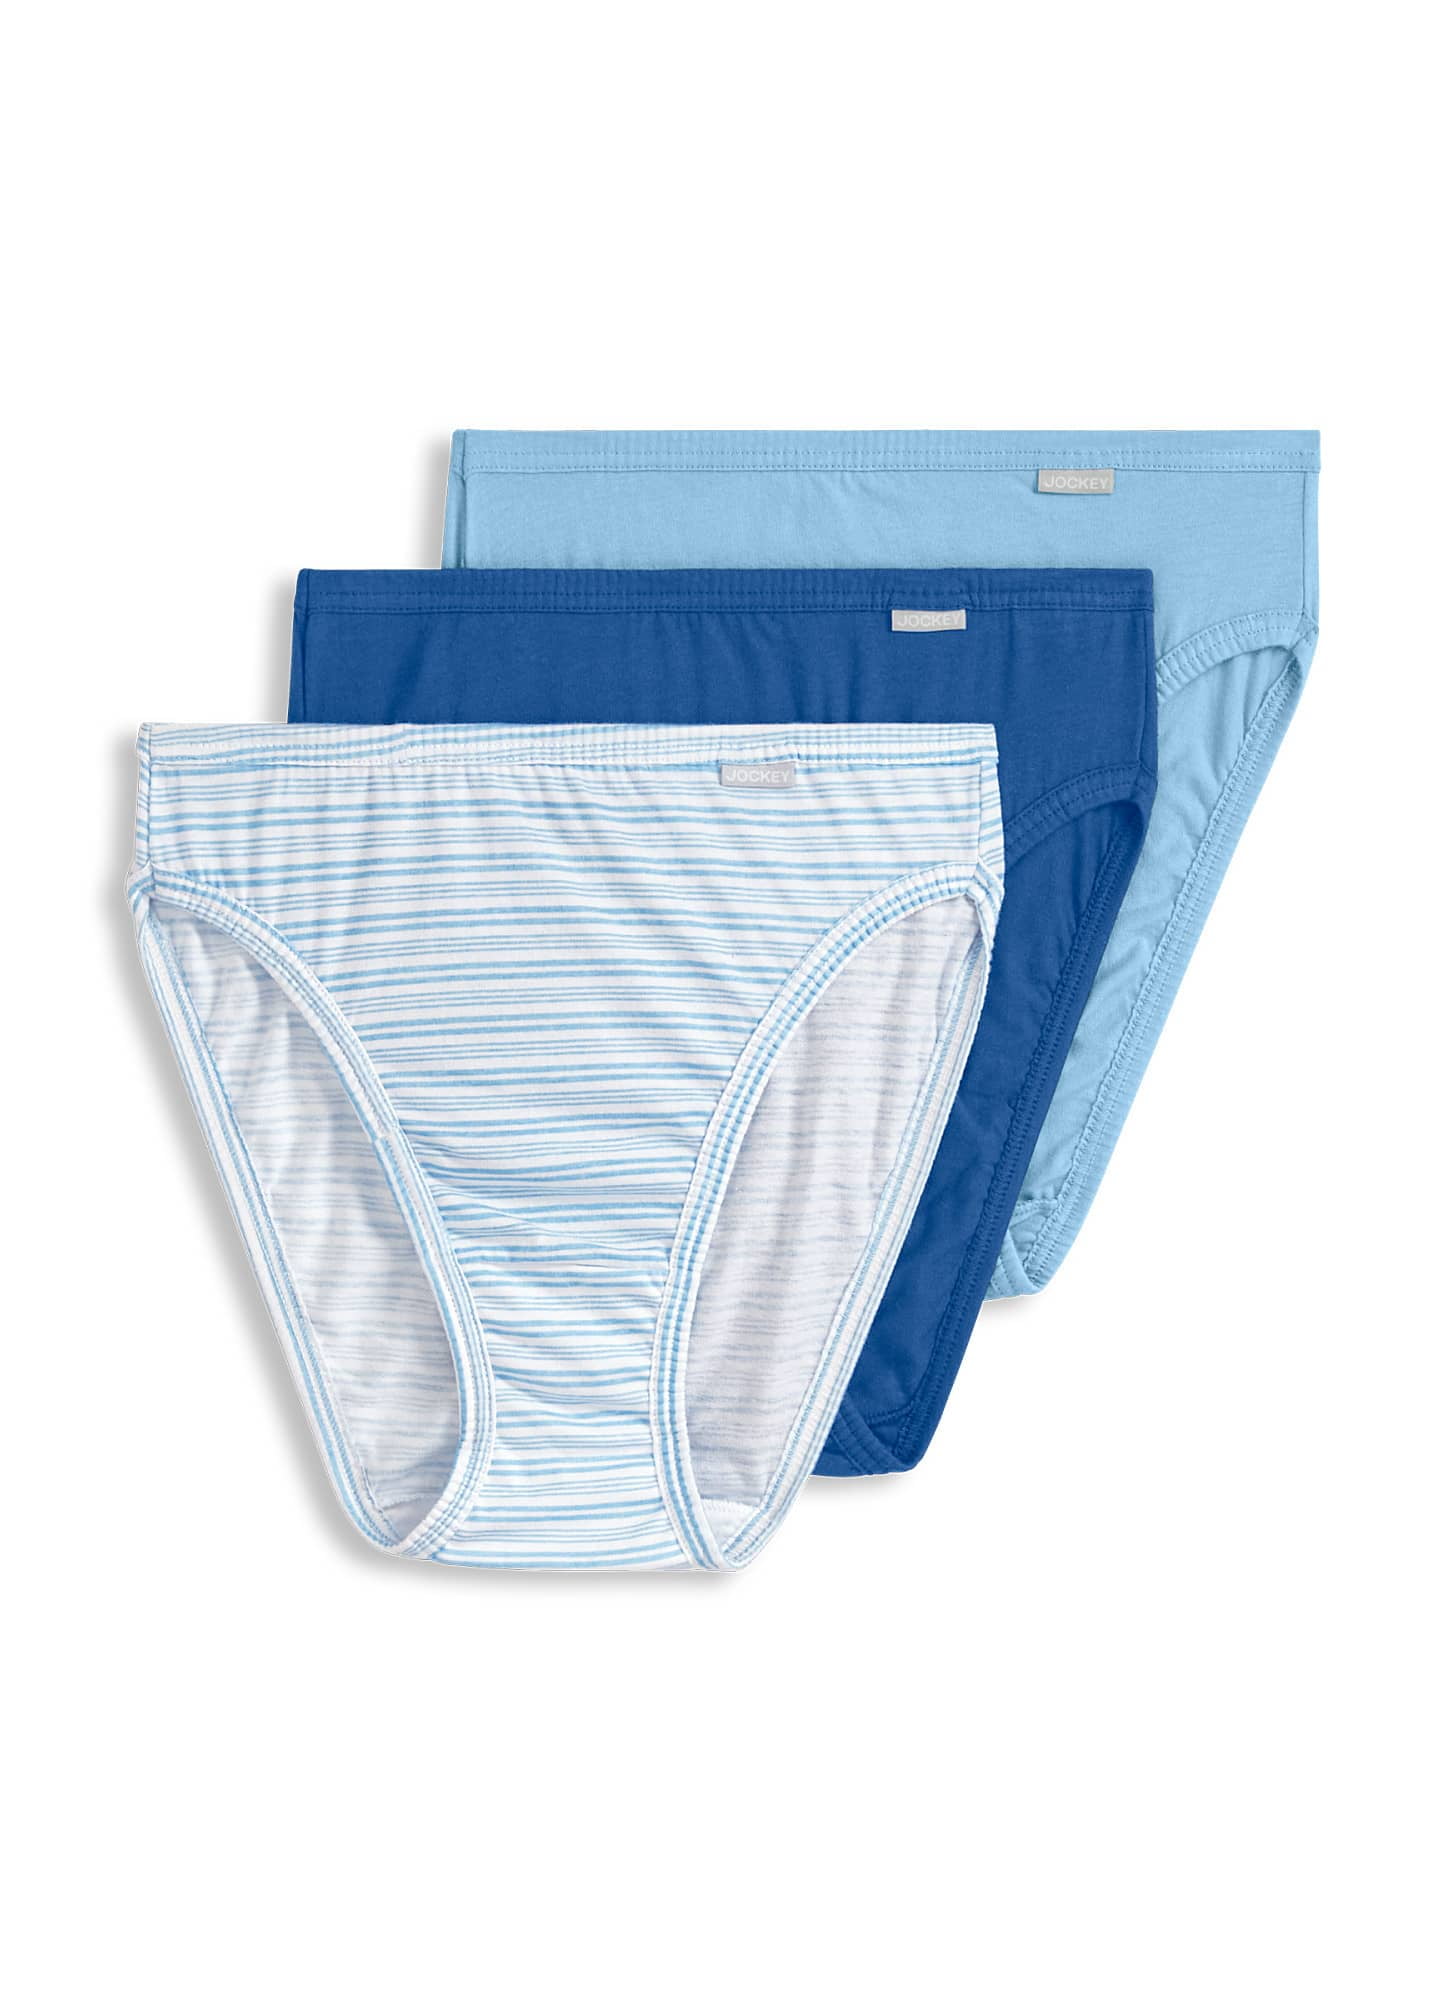 Jockey® Plus Size Elance® French Cut Underwear, 3 pk - Kroger